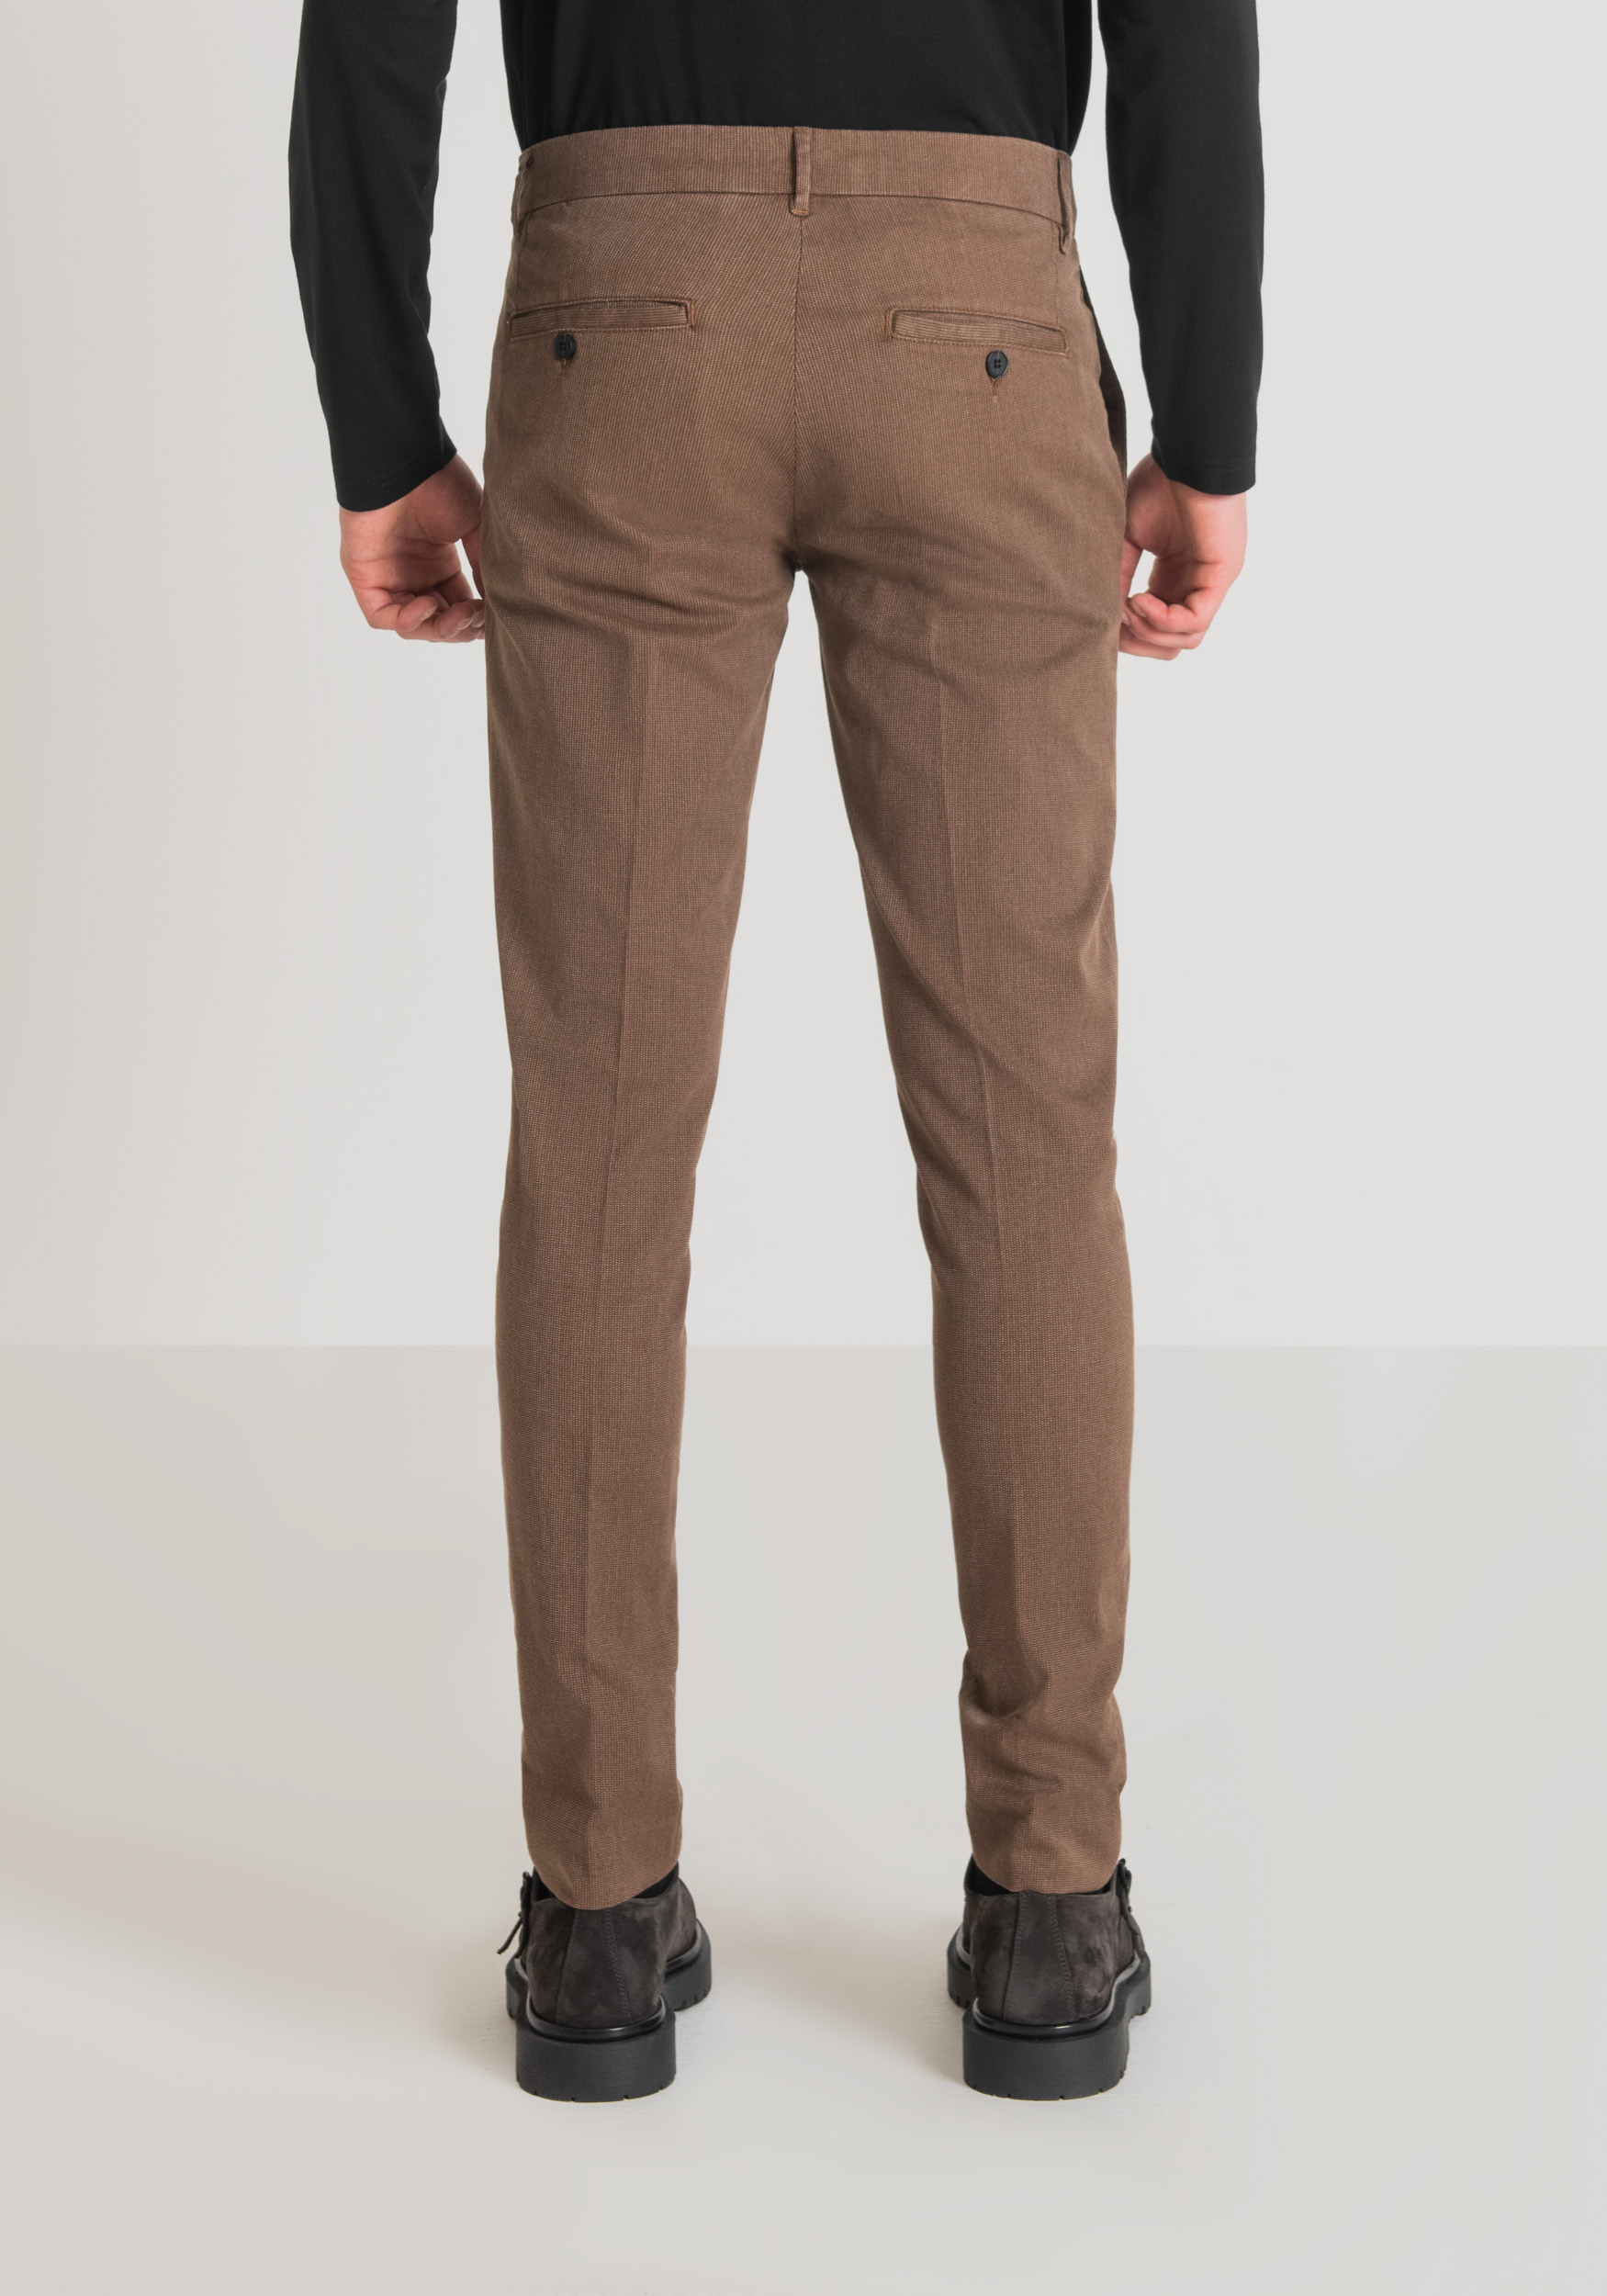 Antony Morato Pantalon Skinny Fit Bryan En Tissu De Coton Melange Elastique Micro-Armure Chameau Fonce | Homme Pantalons